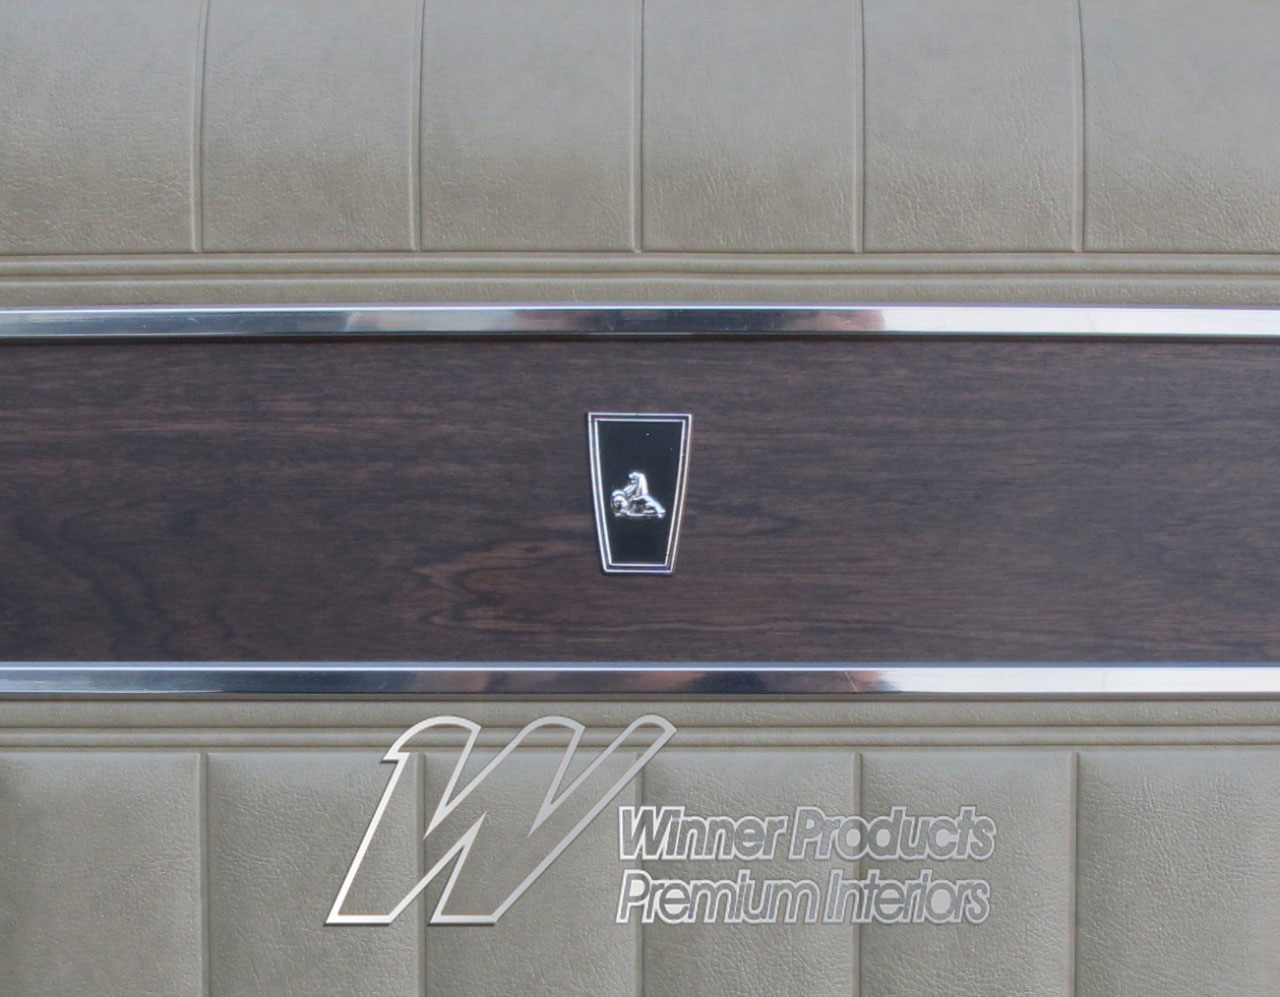 Holden Premier HK Premier Wagon 18S Buckskin Beige & Castillion Weave Door Trims (Image 3 of 3)